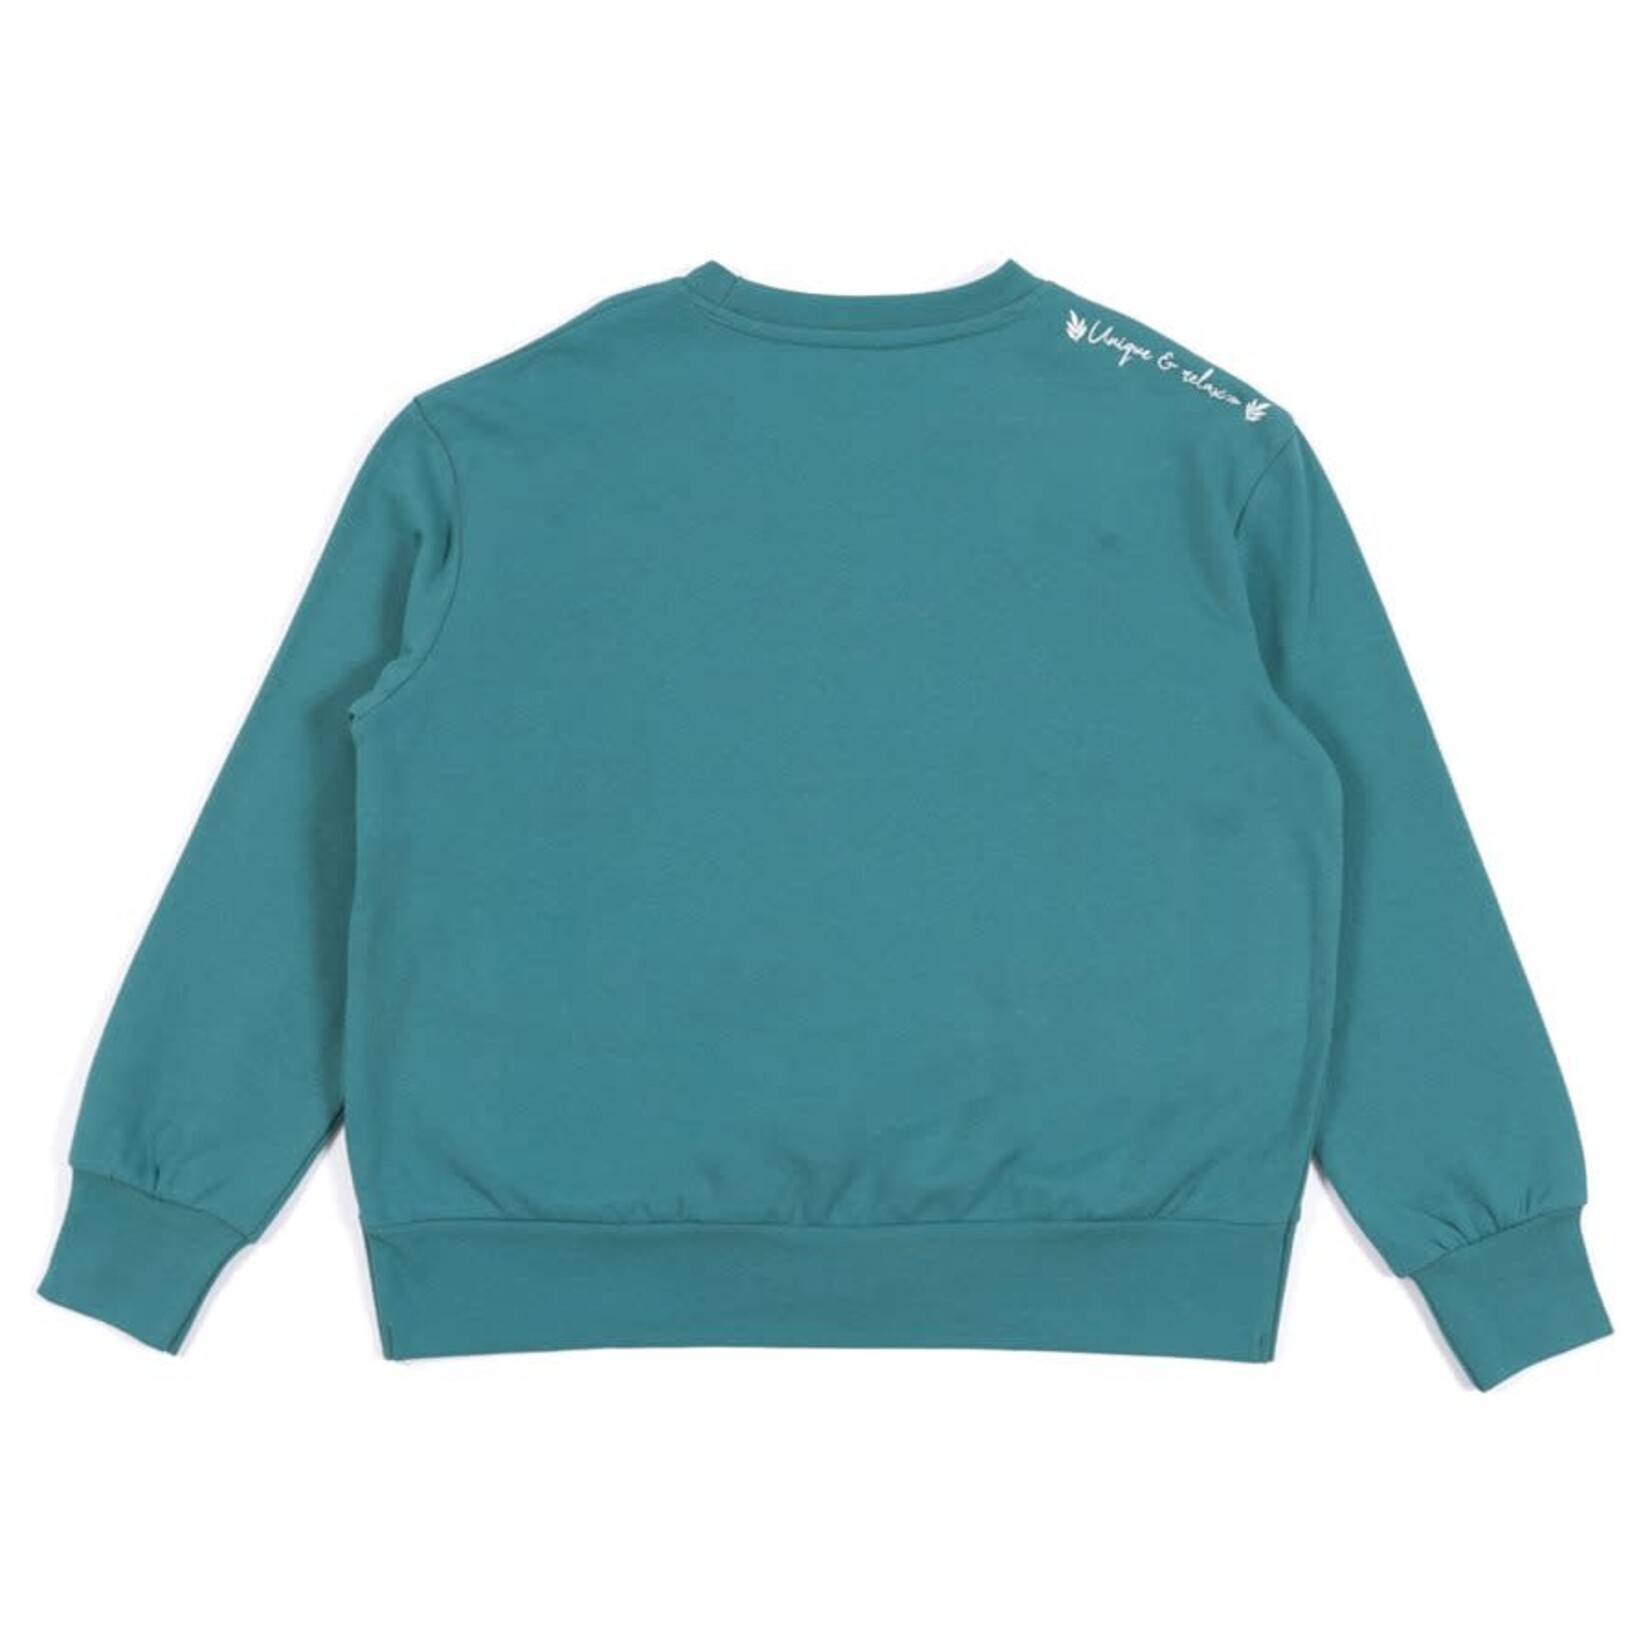 Nanö NANÖ - Plain Teal Cropped Sweatshirt 'Unique & Relax - Loungewear'